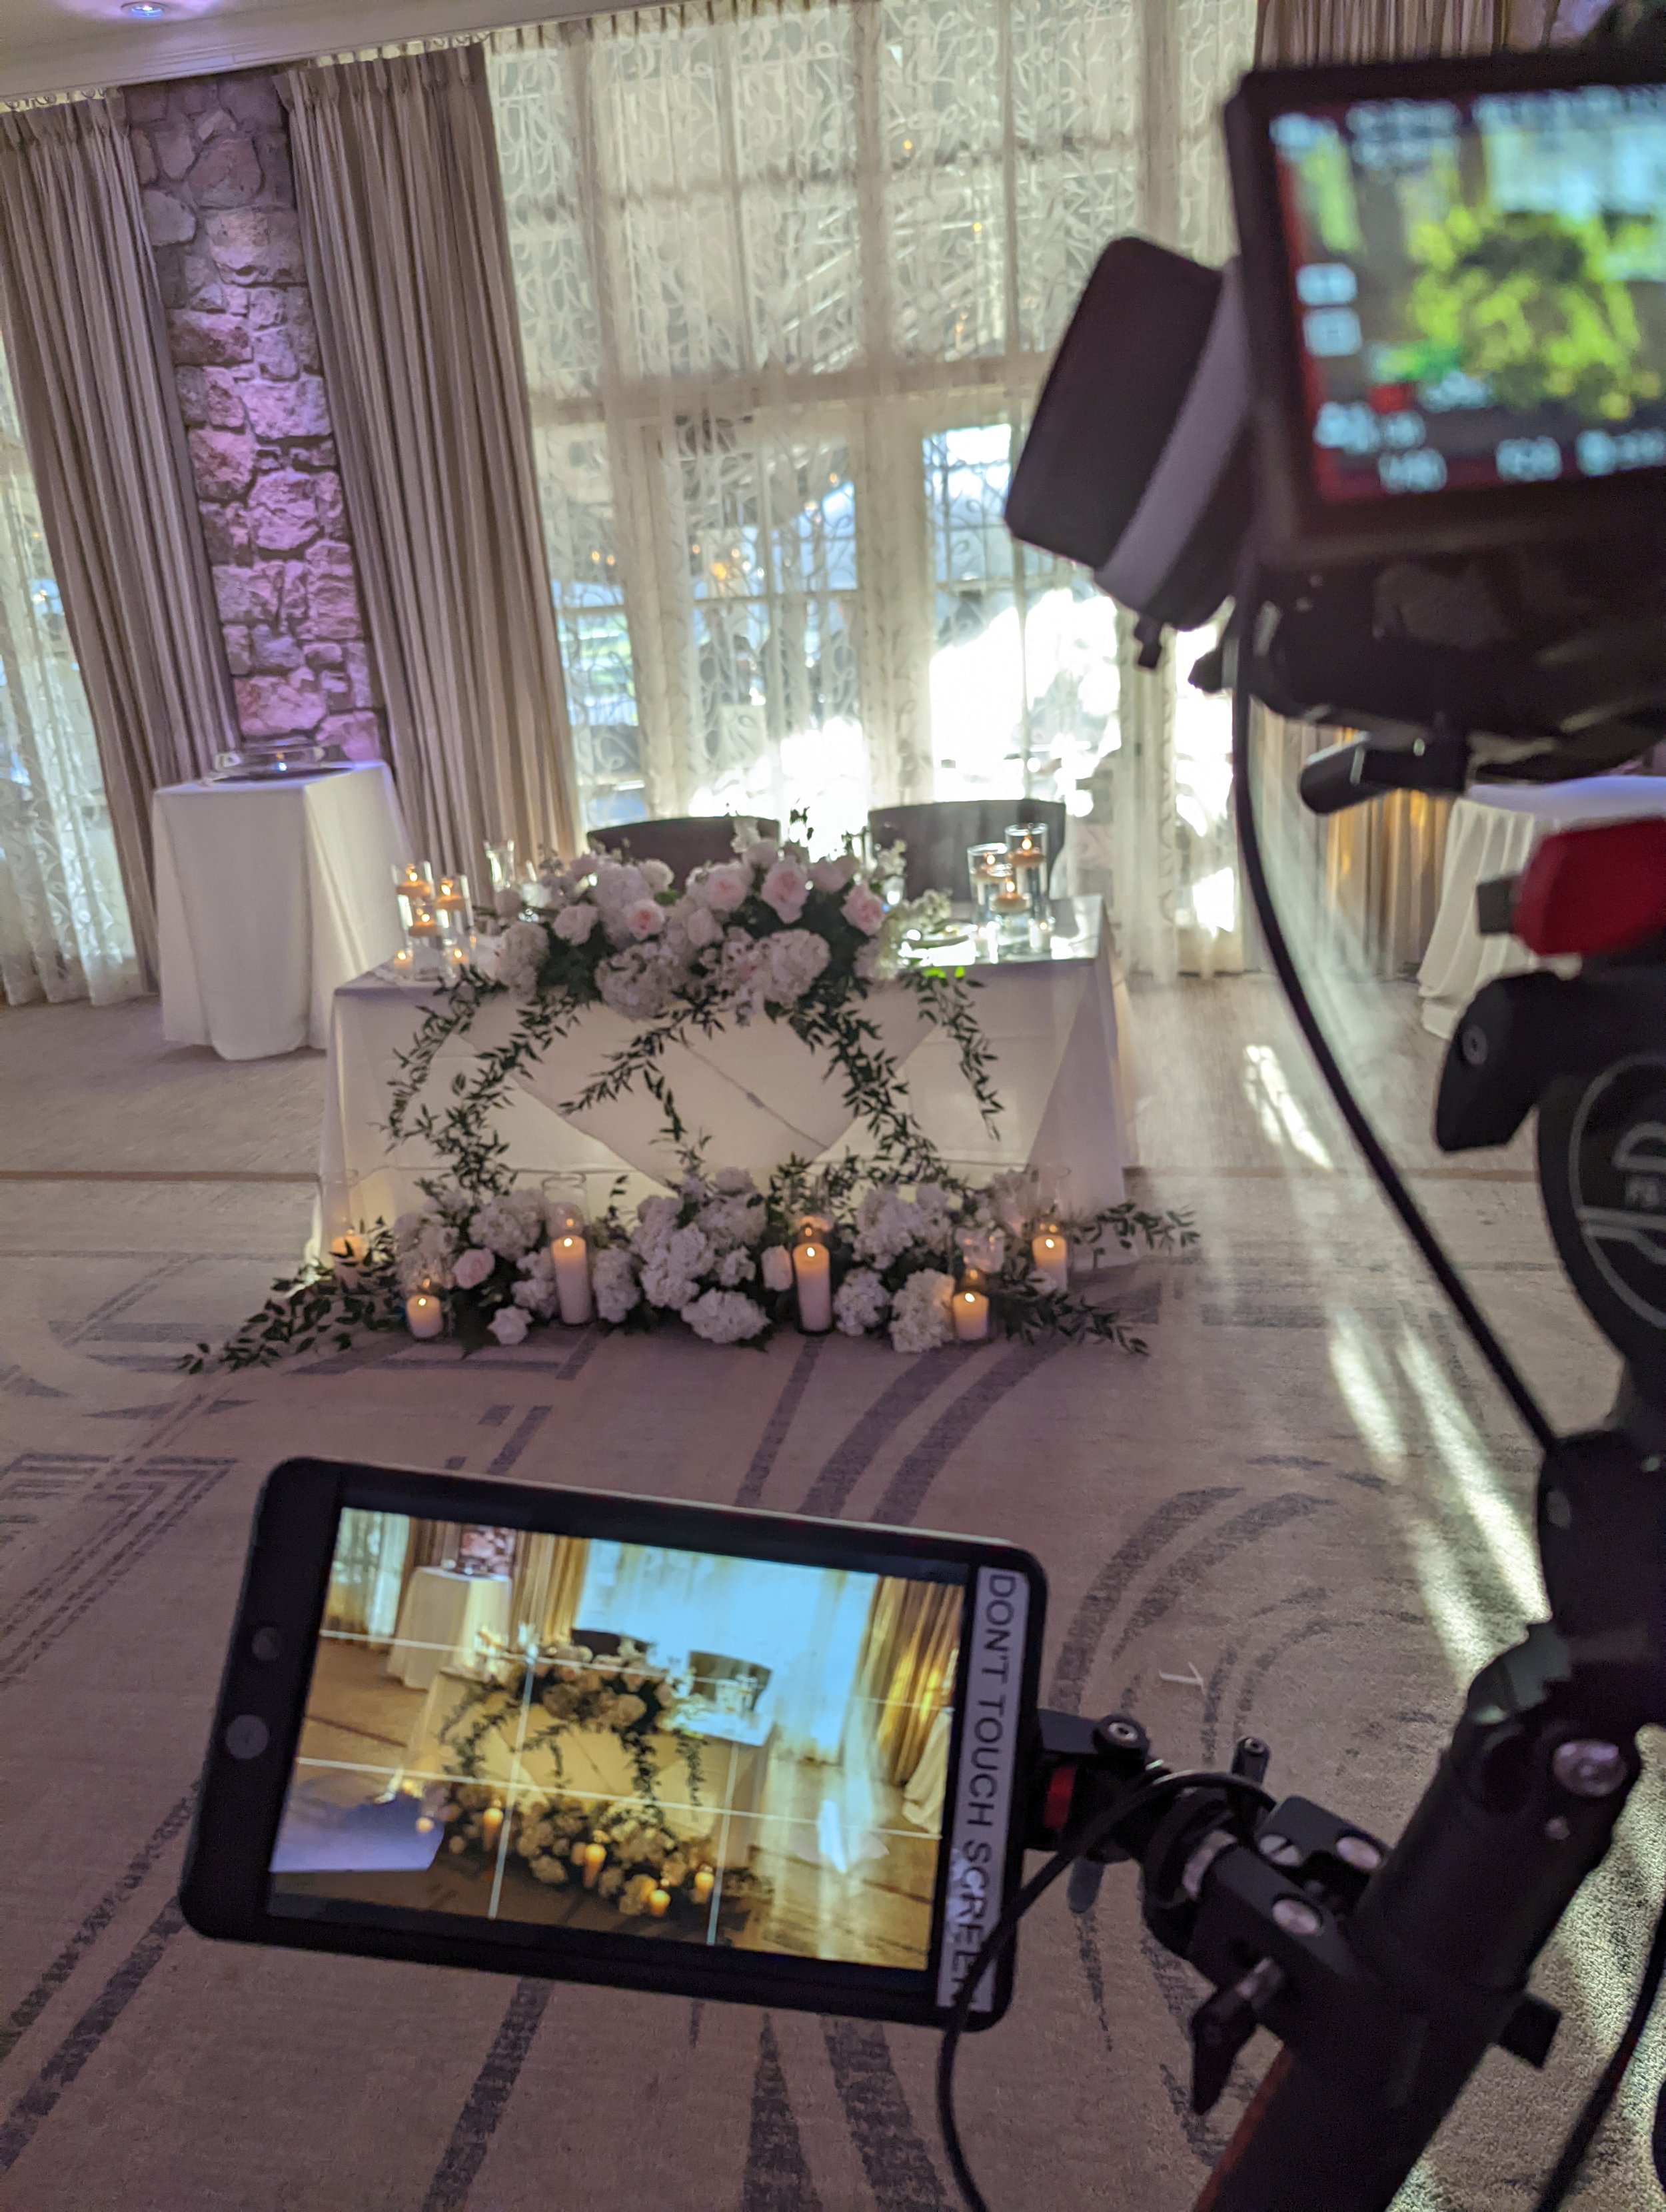  BTS of NJ wedding Videographer - Wedding videographer near me in nj  - New Jersey Wedding videographers working on a Wedding Video 